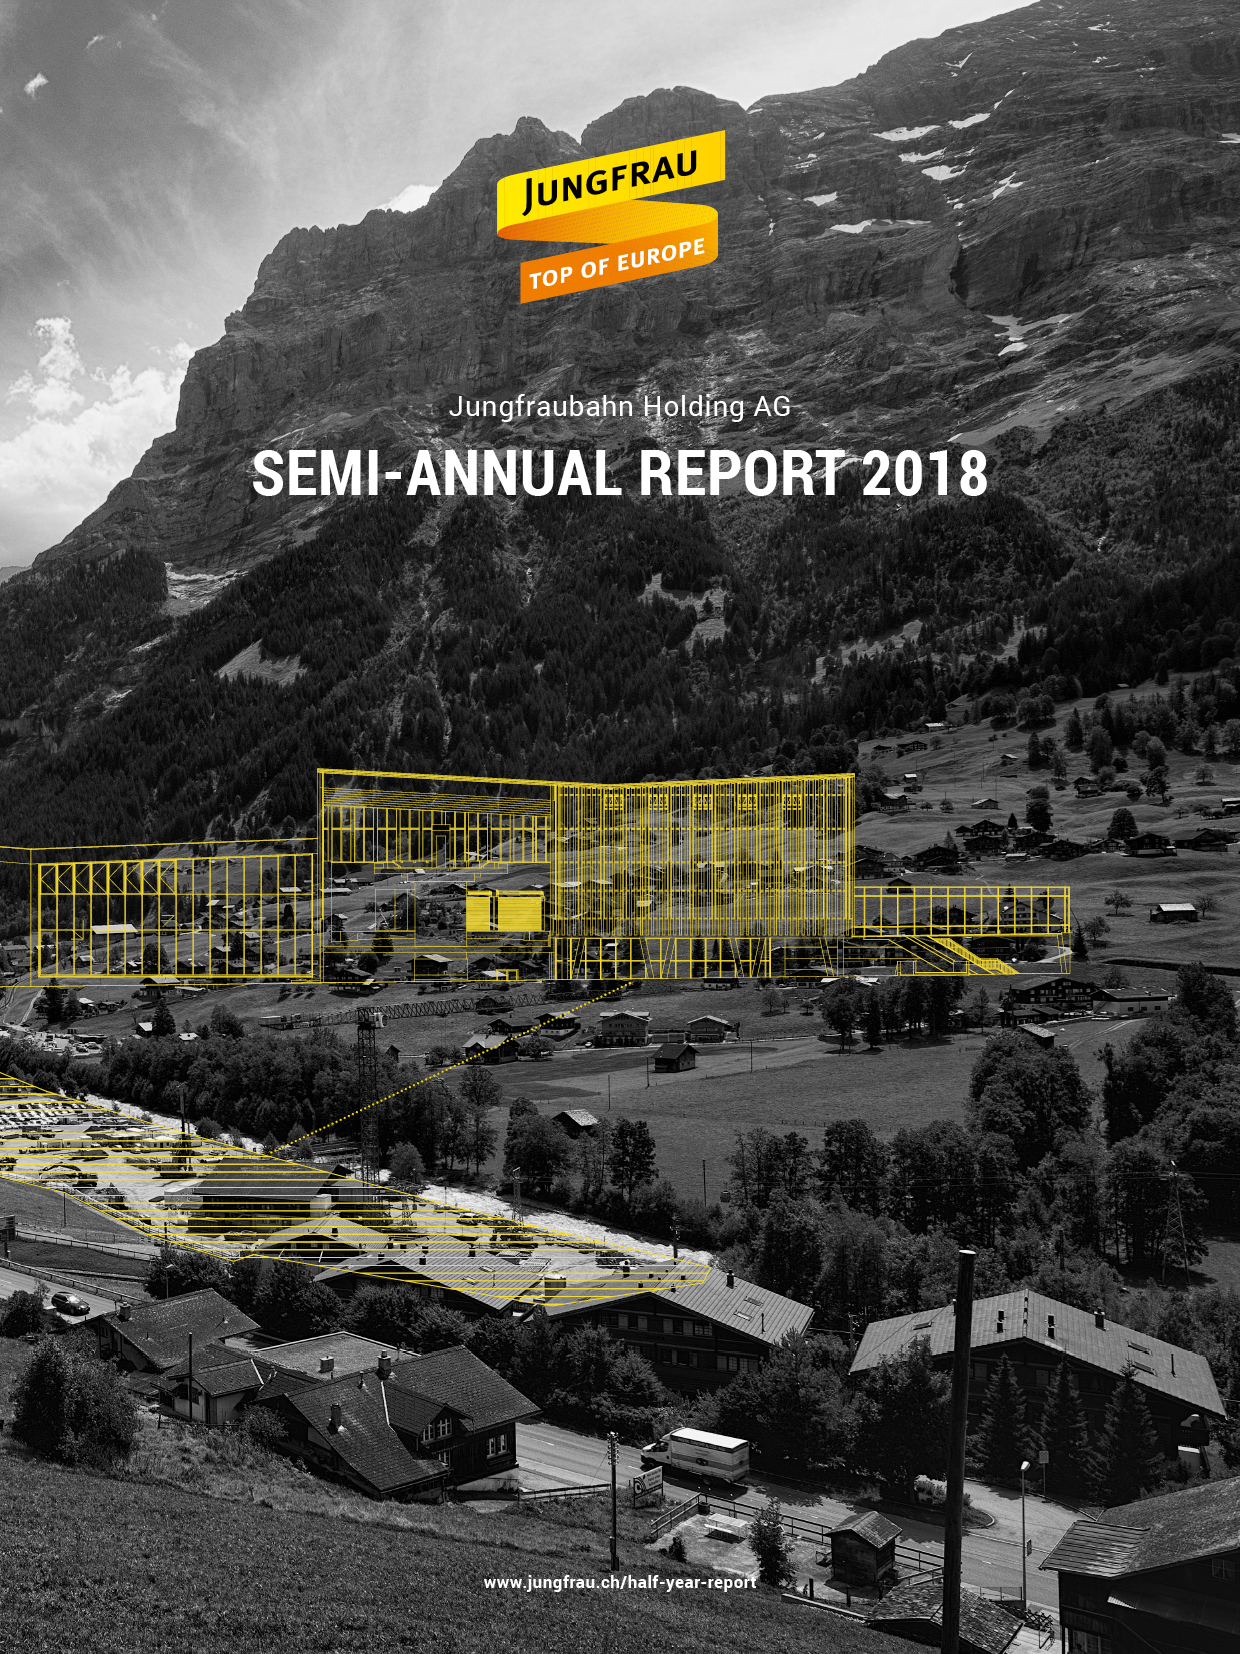 2018 semi-annual report of Jungfraubahn Holding AG